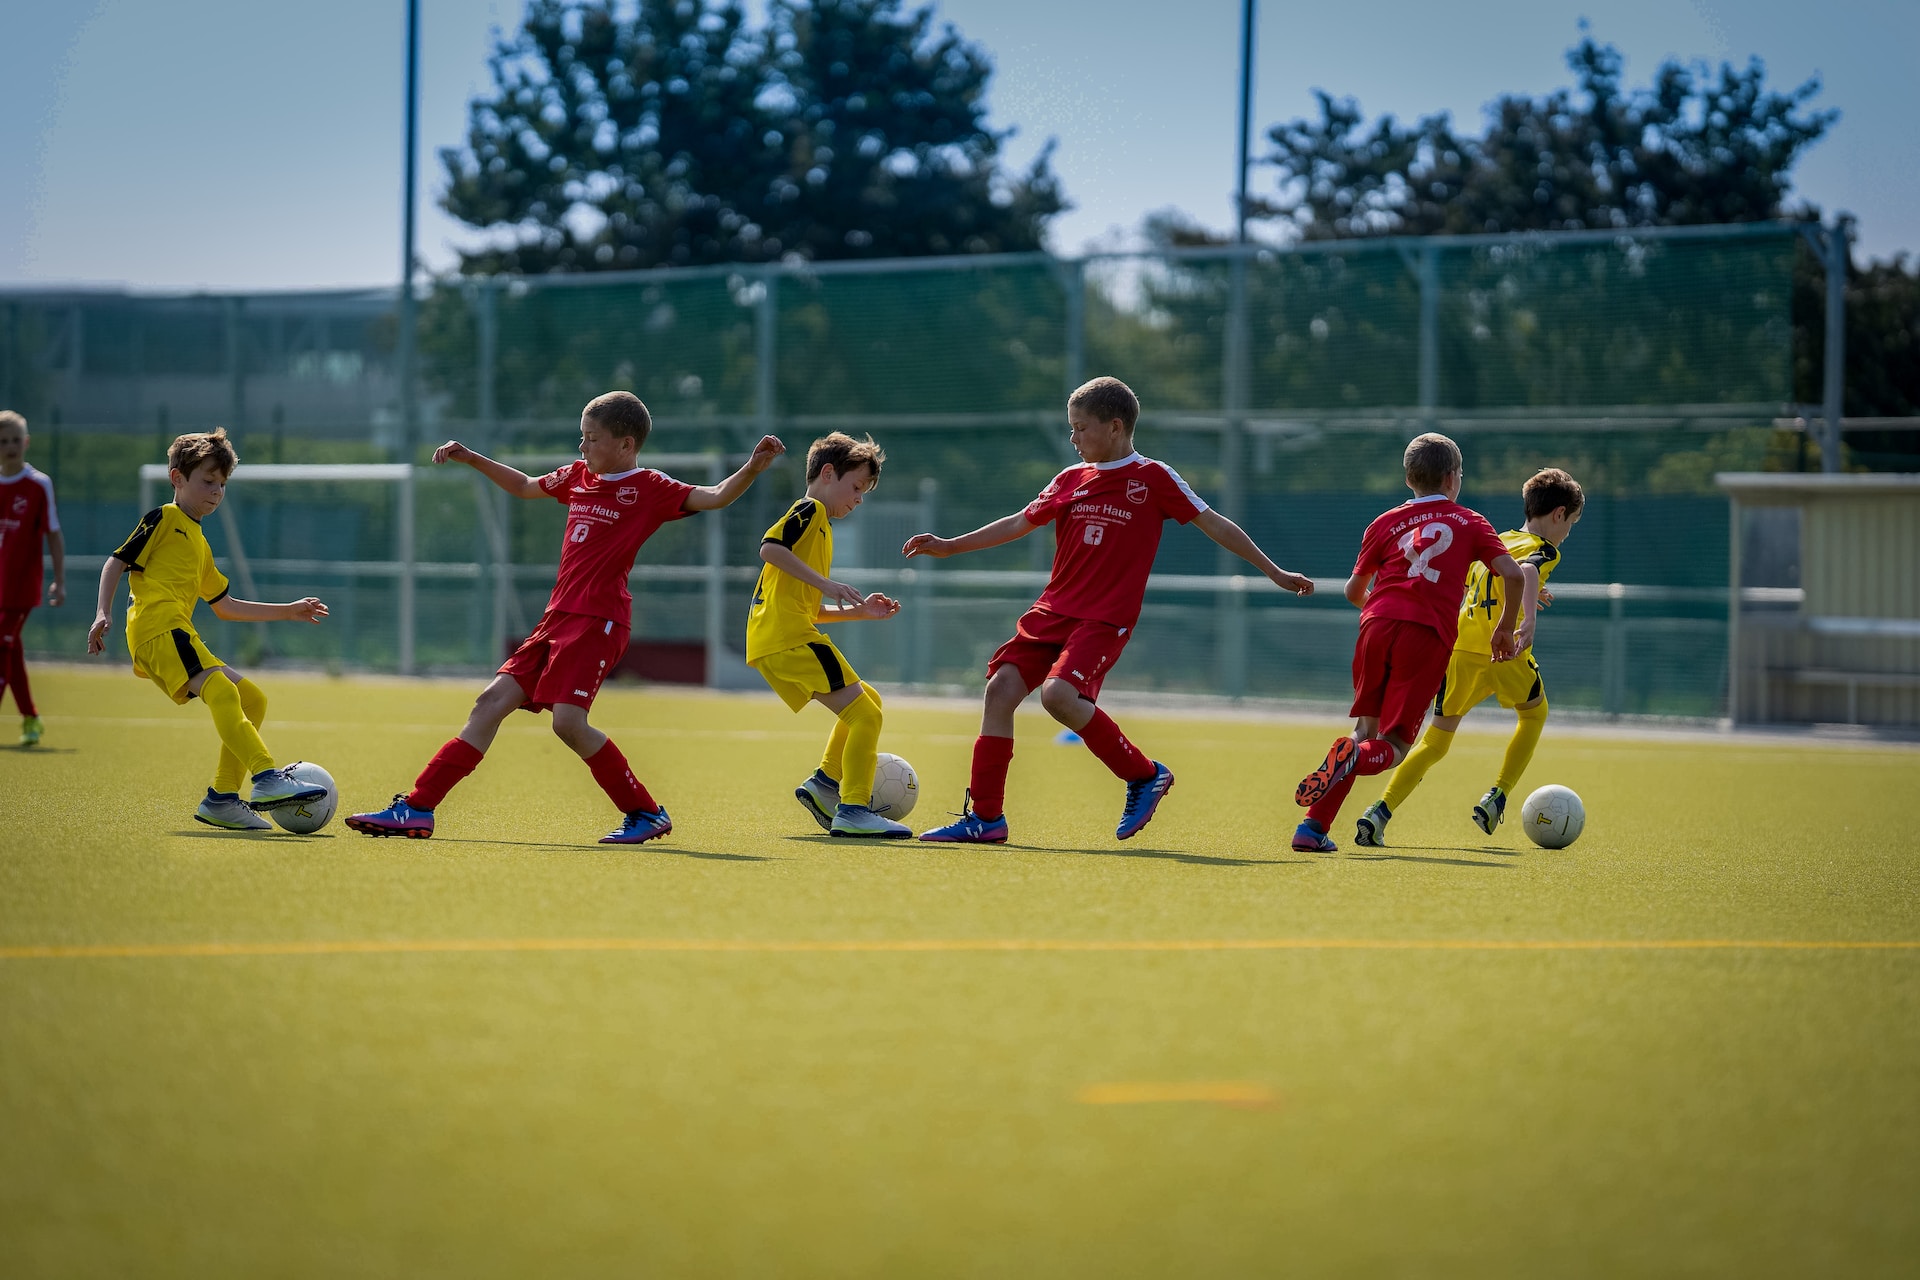 Kickstart Your Adventure in Coaching Kids Soccer